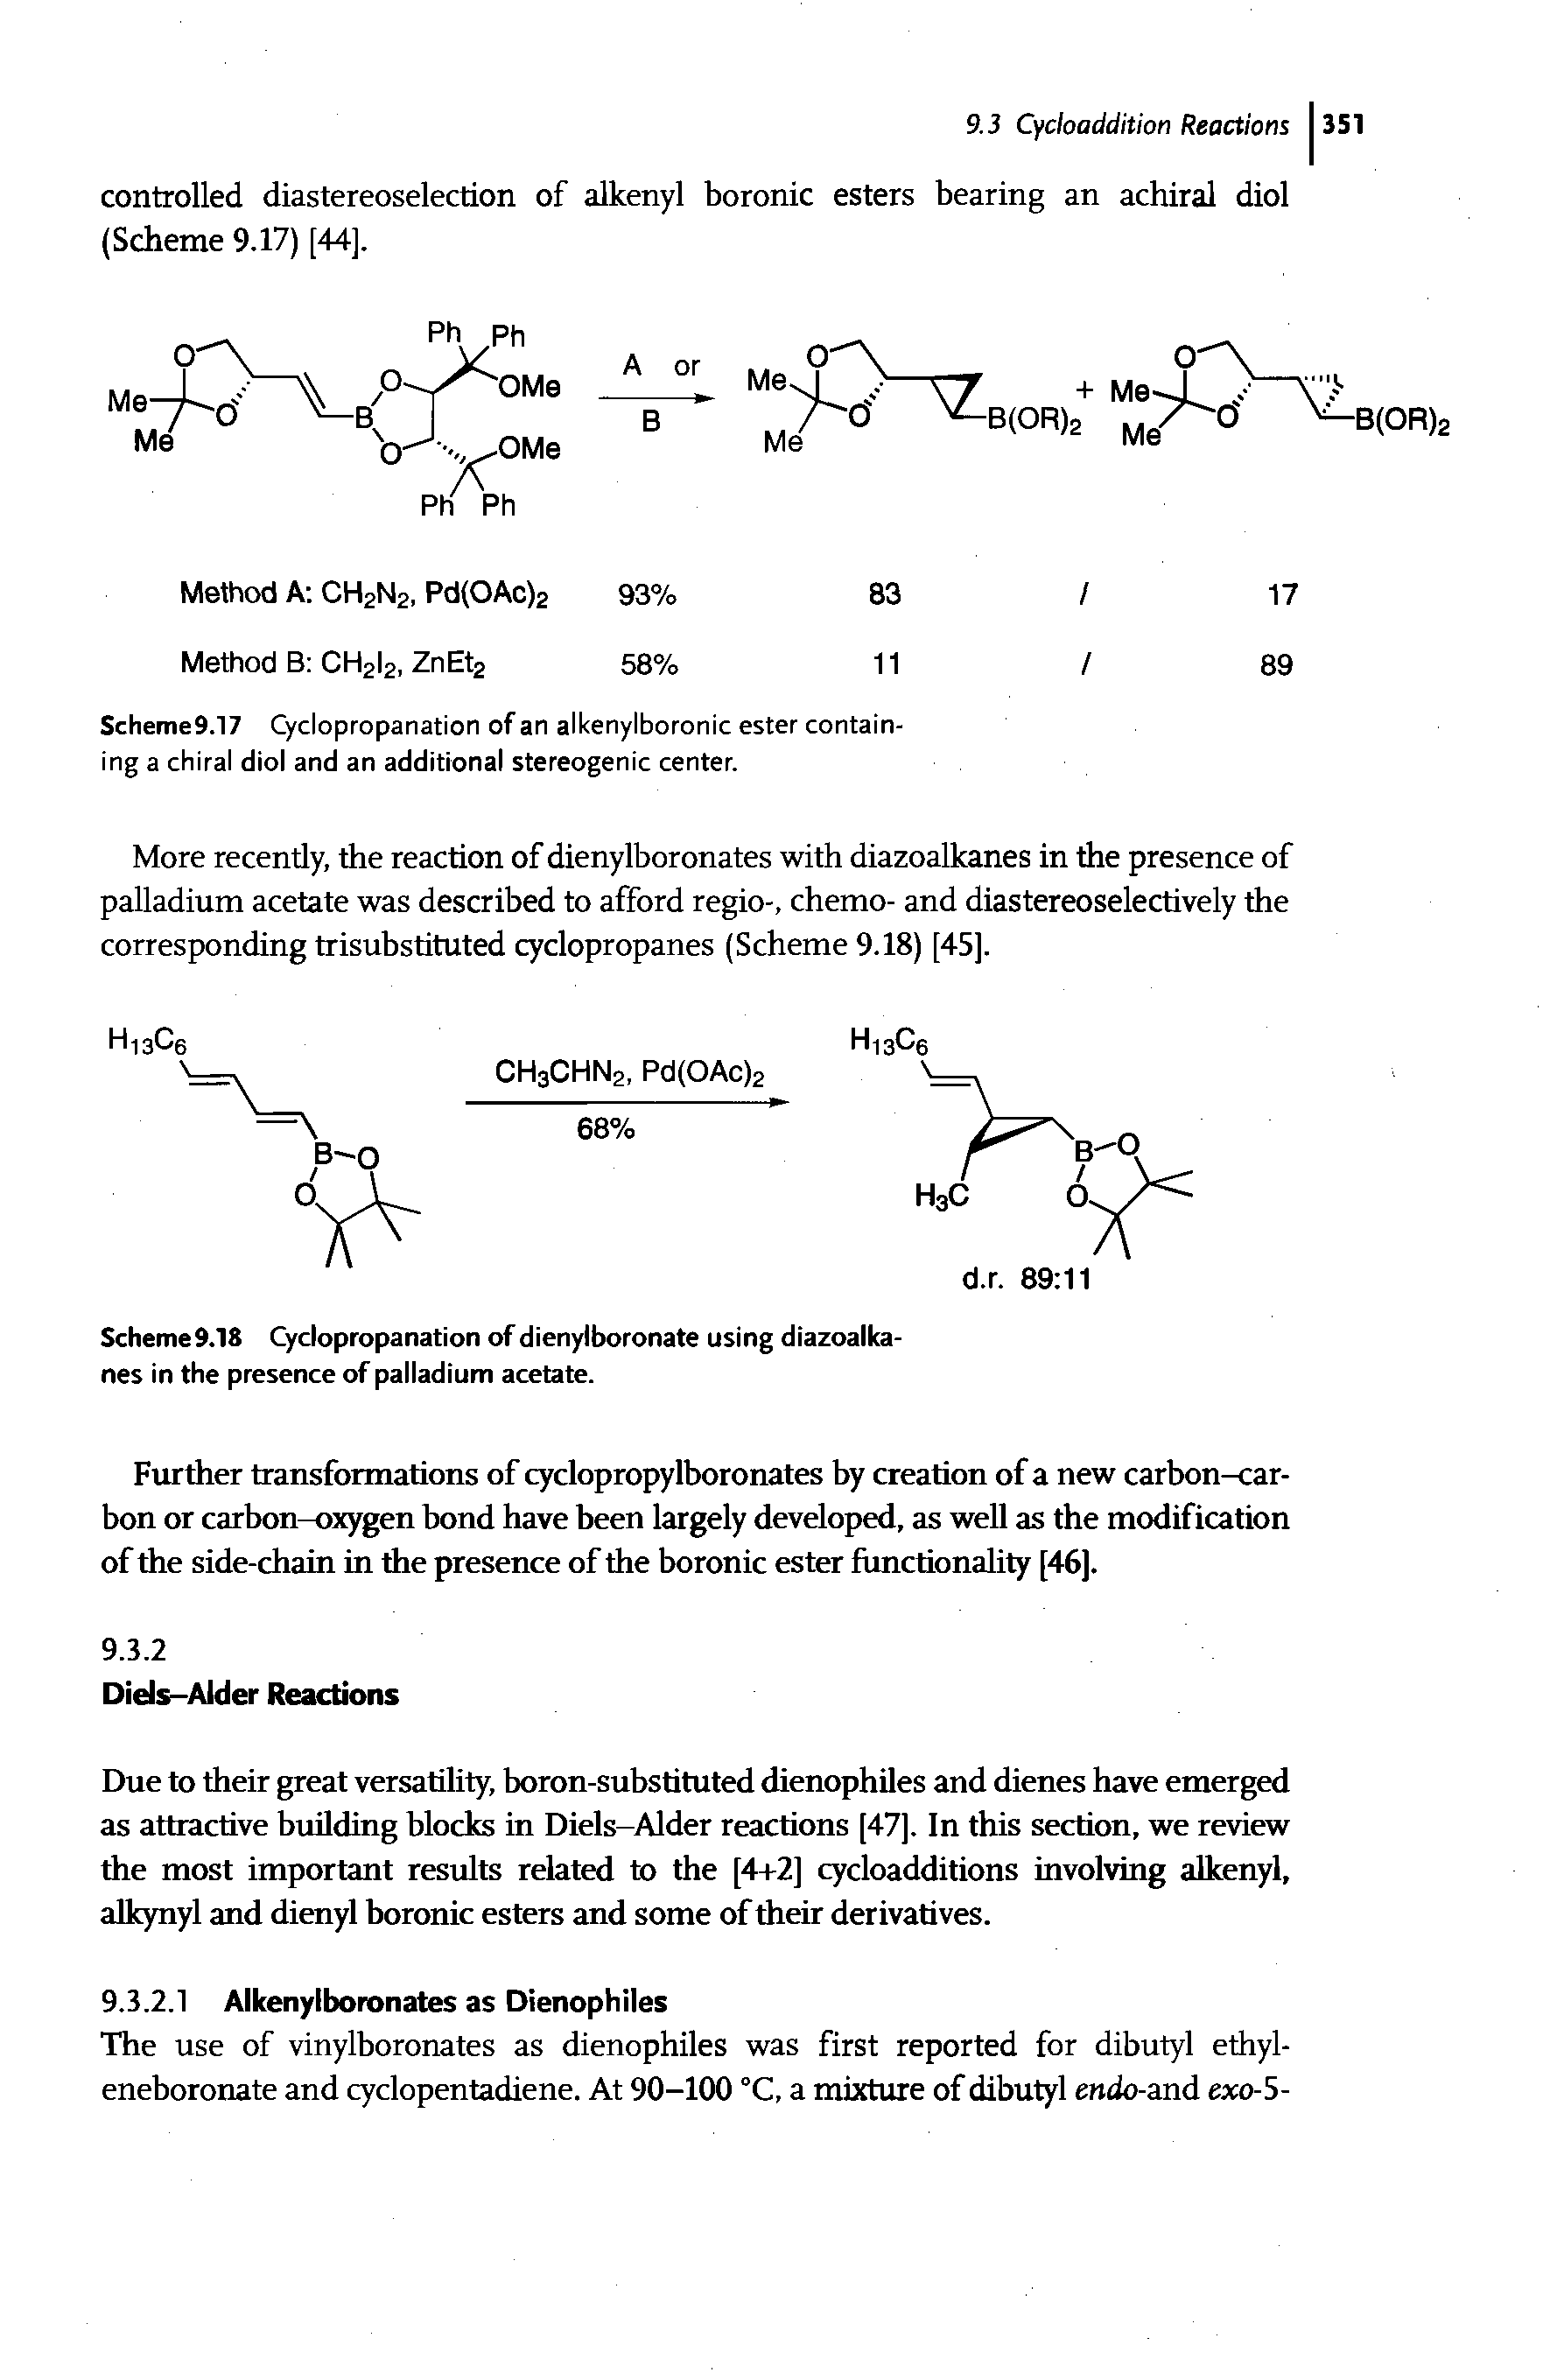 Scheme 9.18 Cyclopropanation of dienylboronate using diazoalkanes in the presence of palladium acetate.